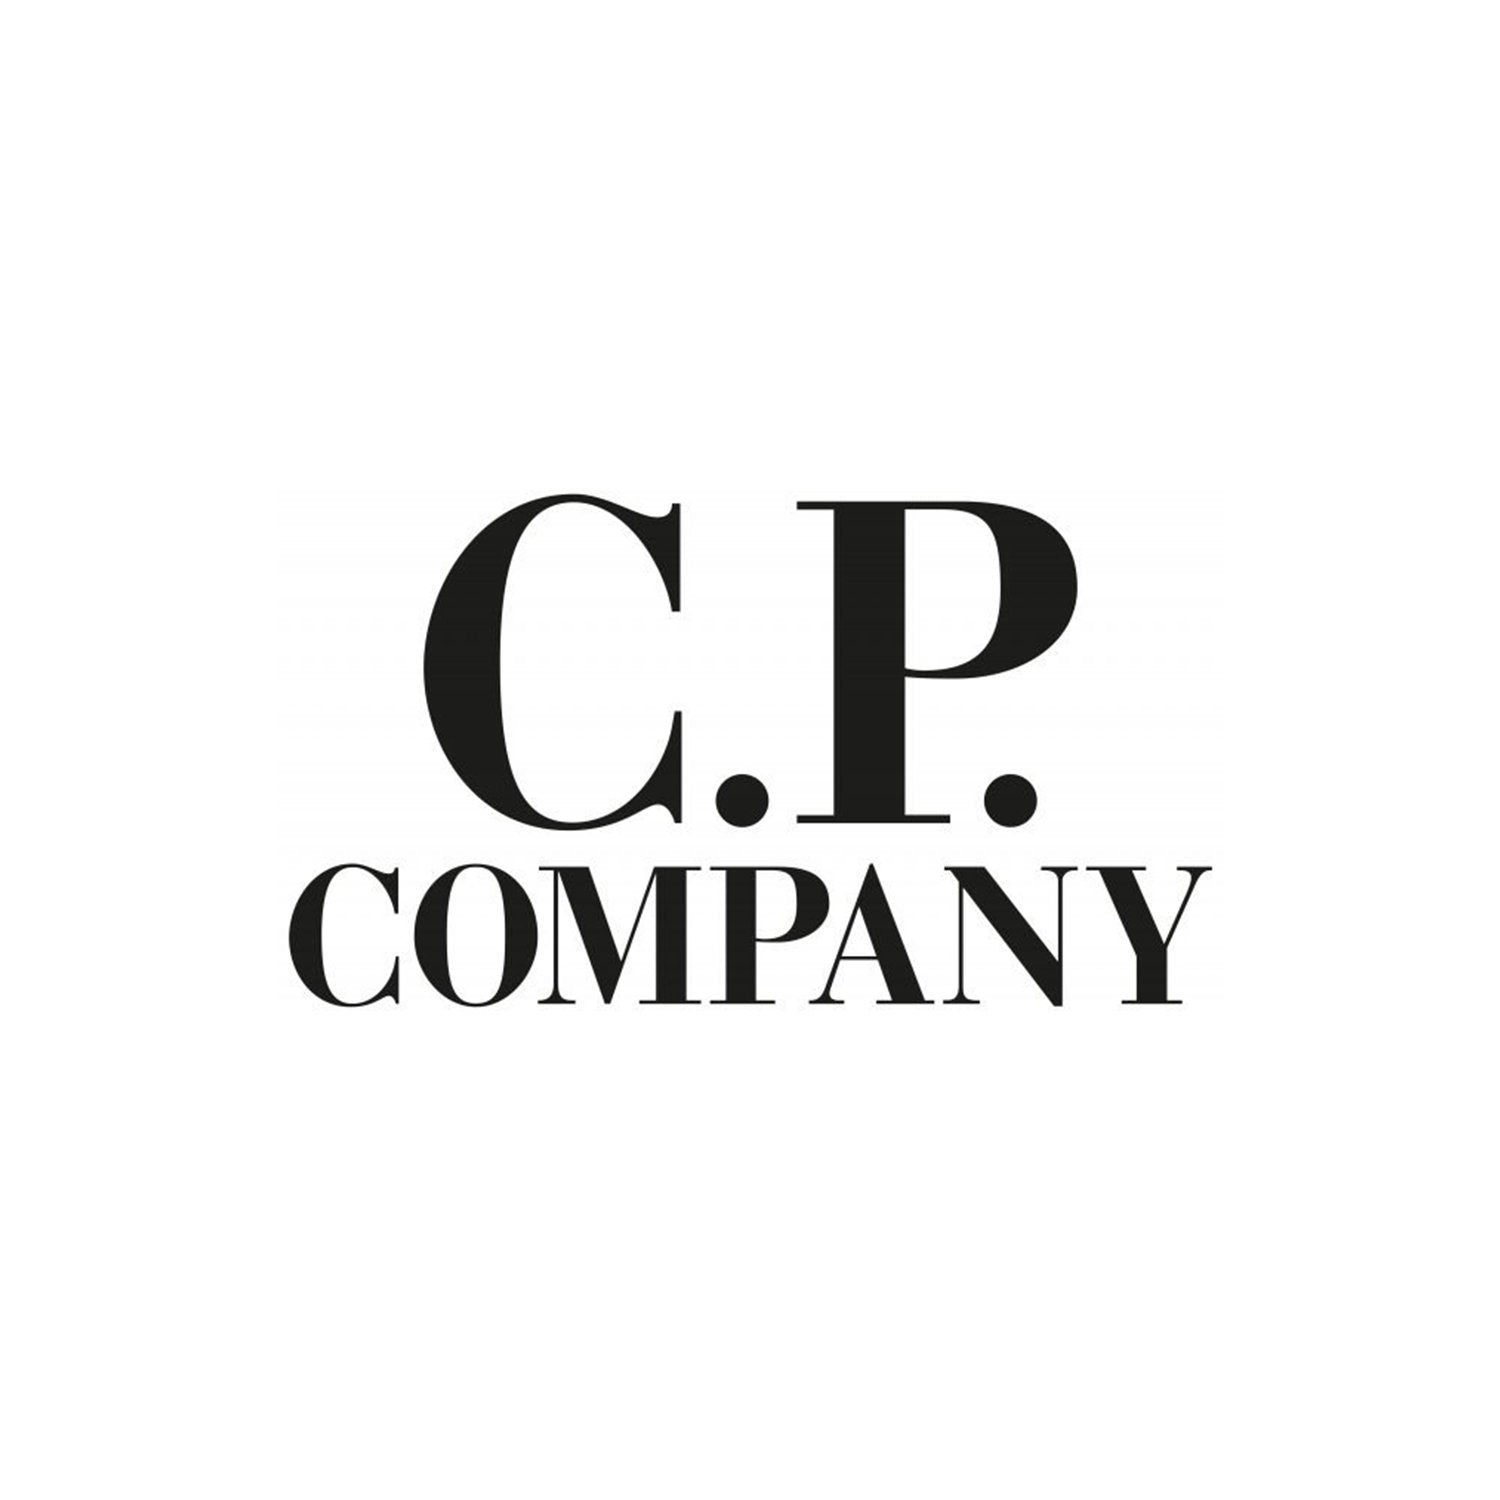 C.P.COMPANY